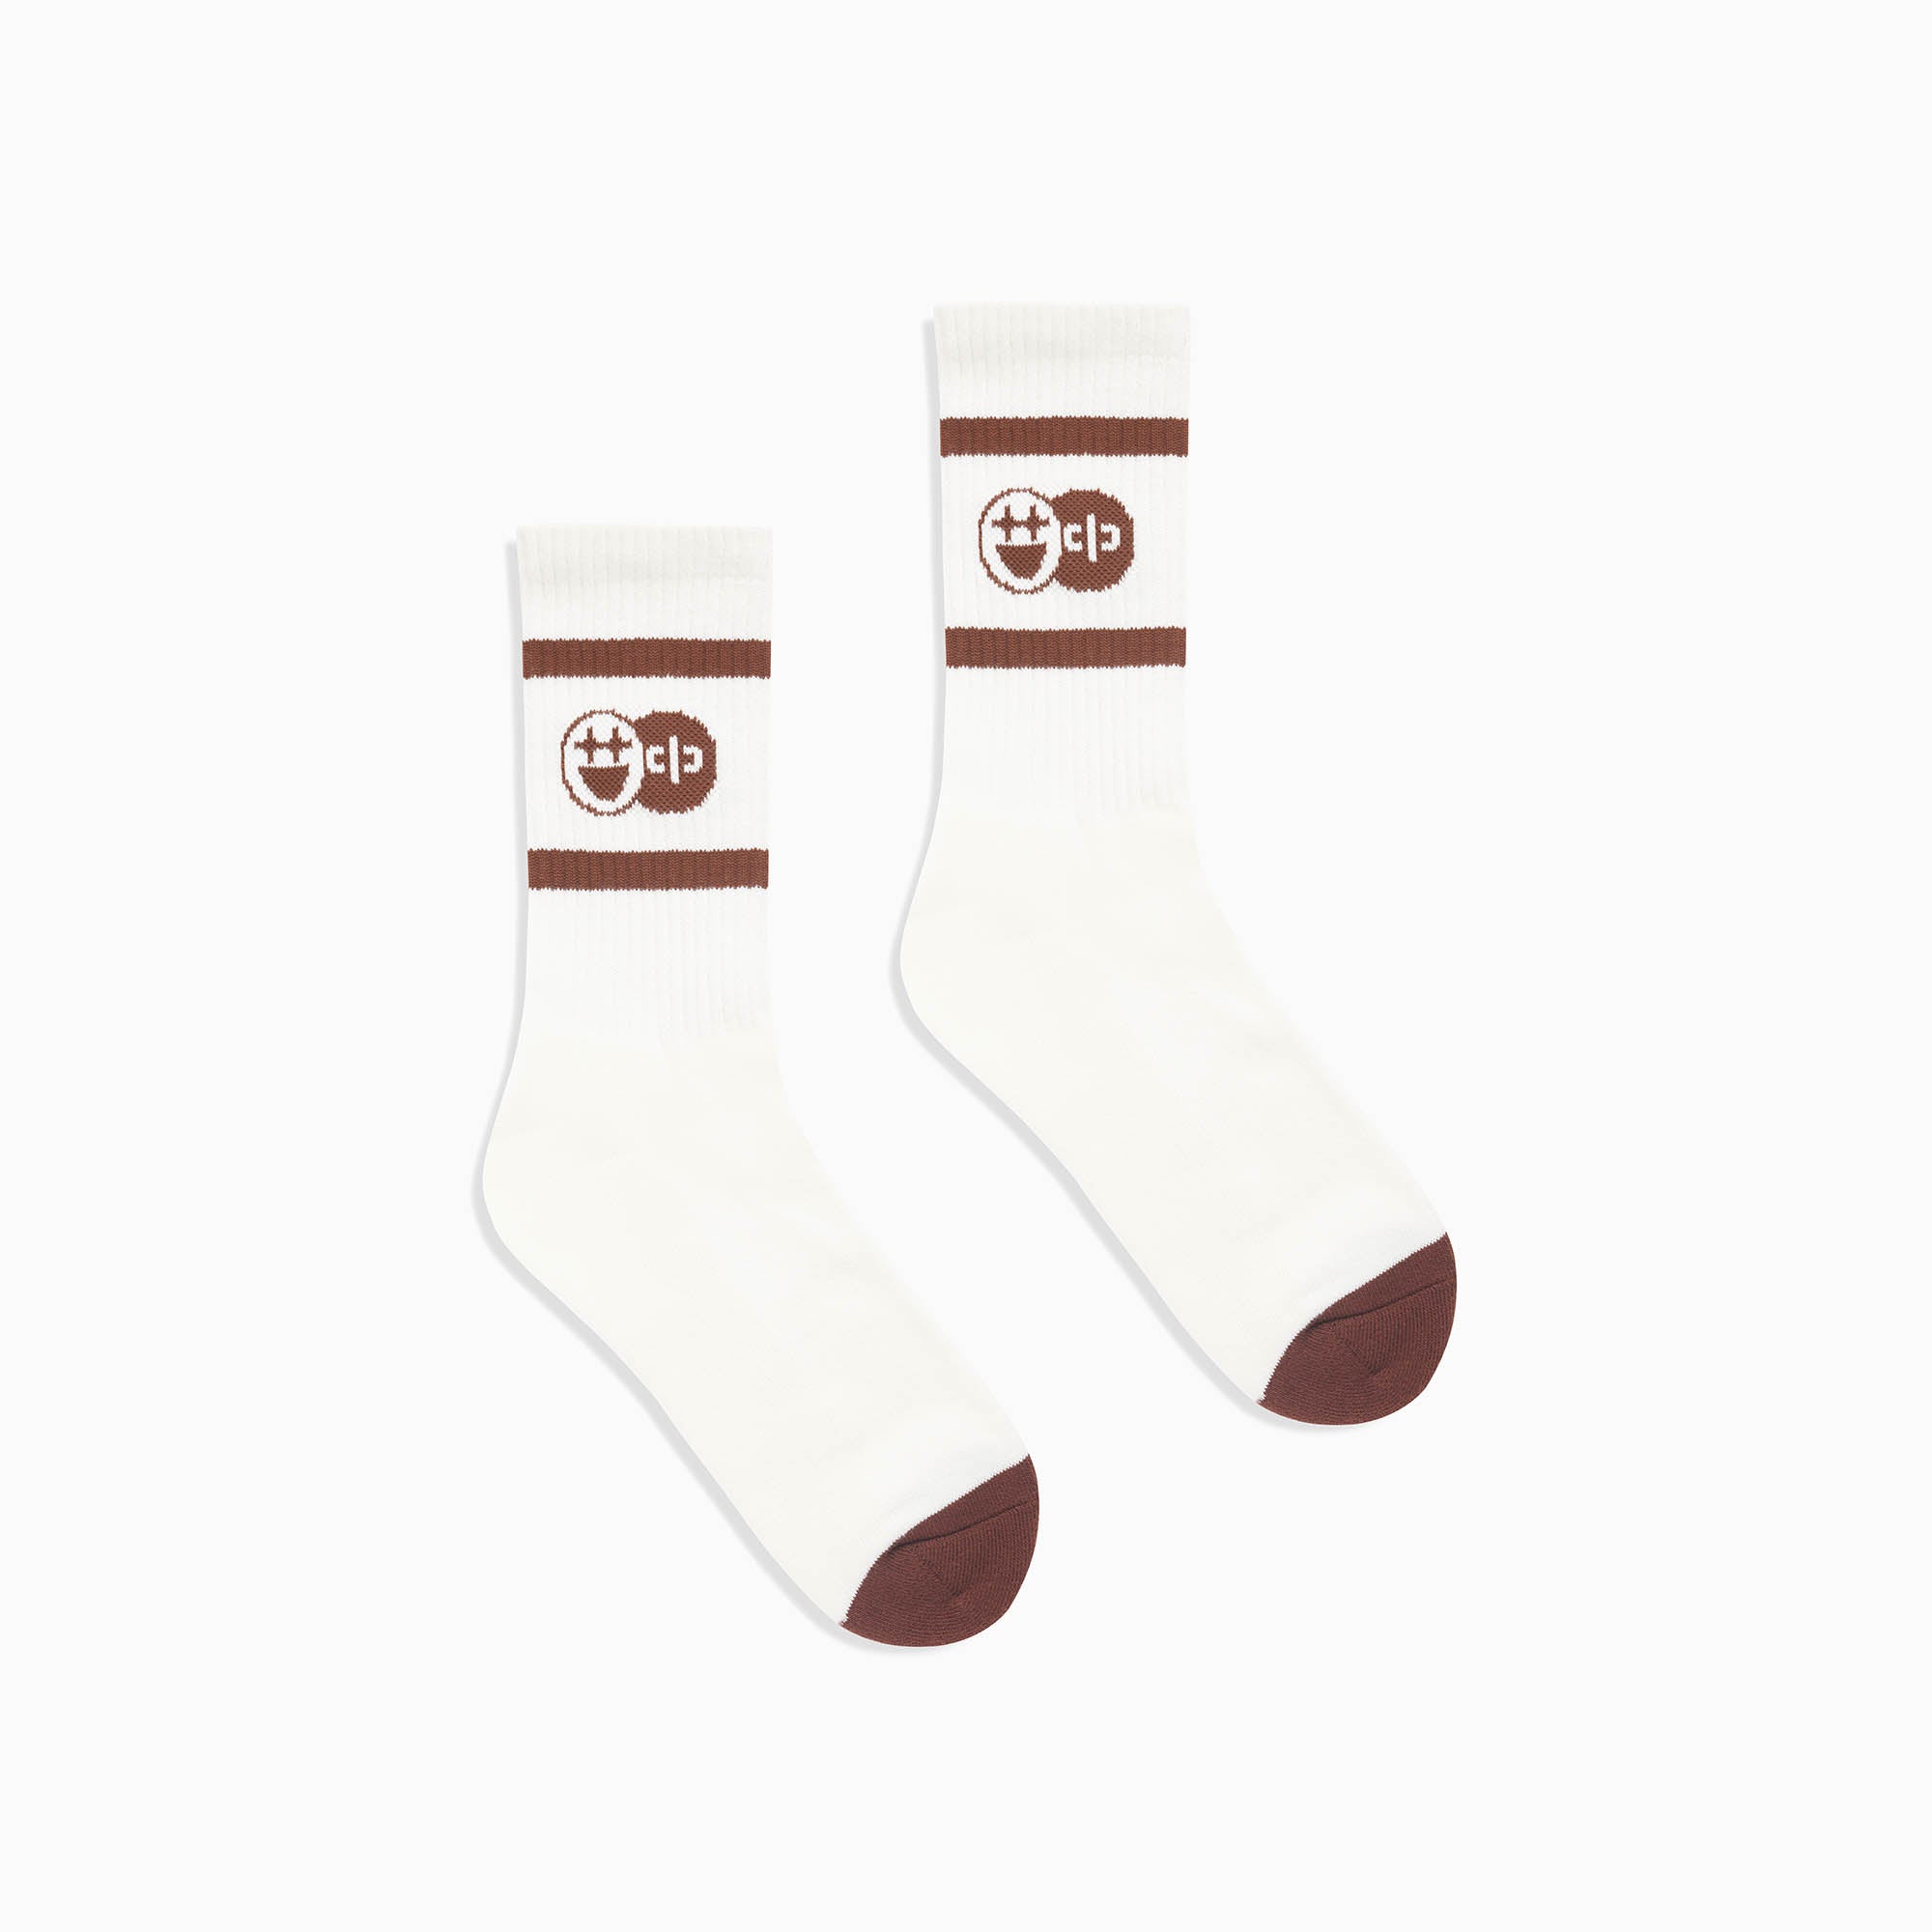 DP x BigFace b-ball sock / cream + brown